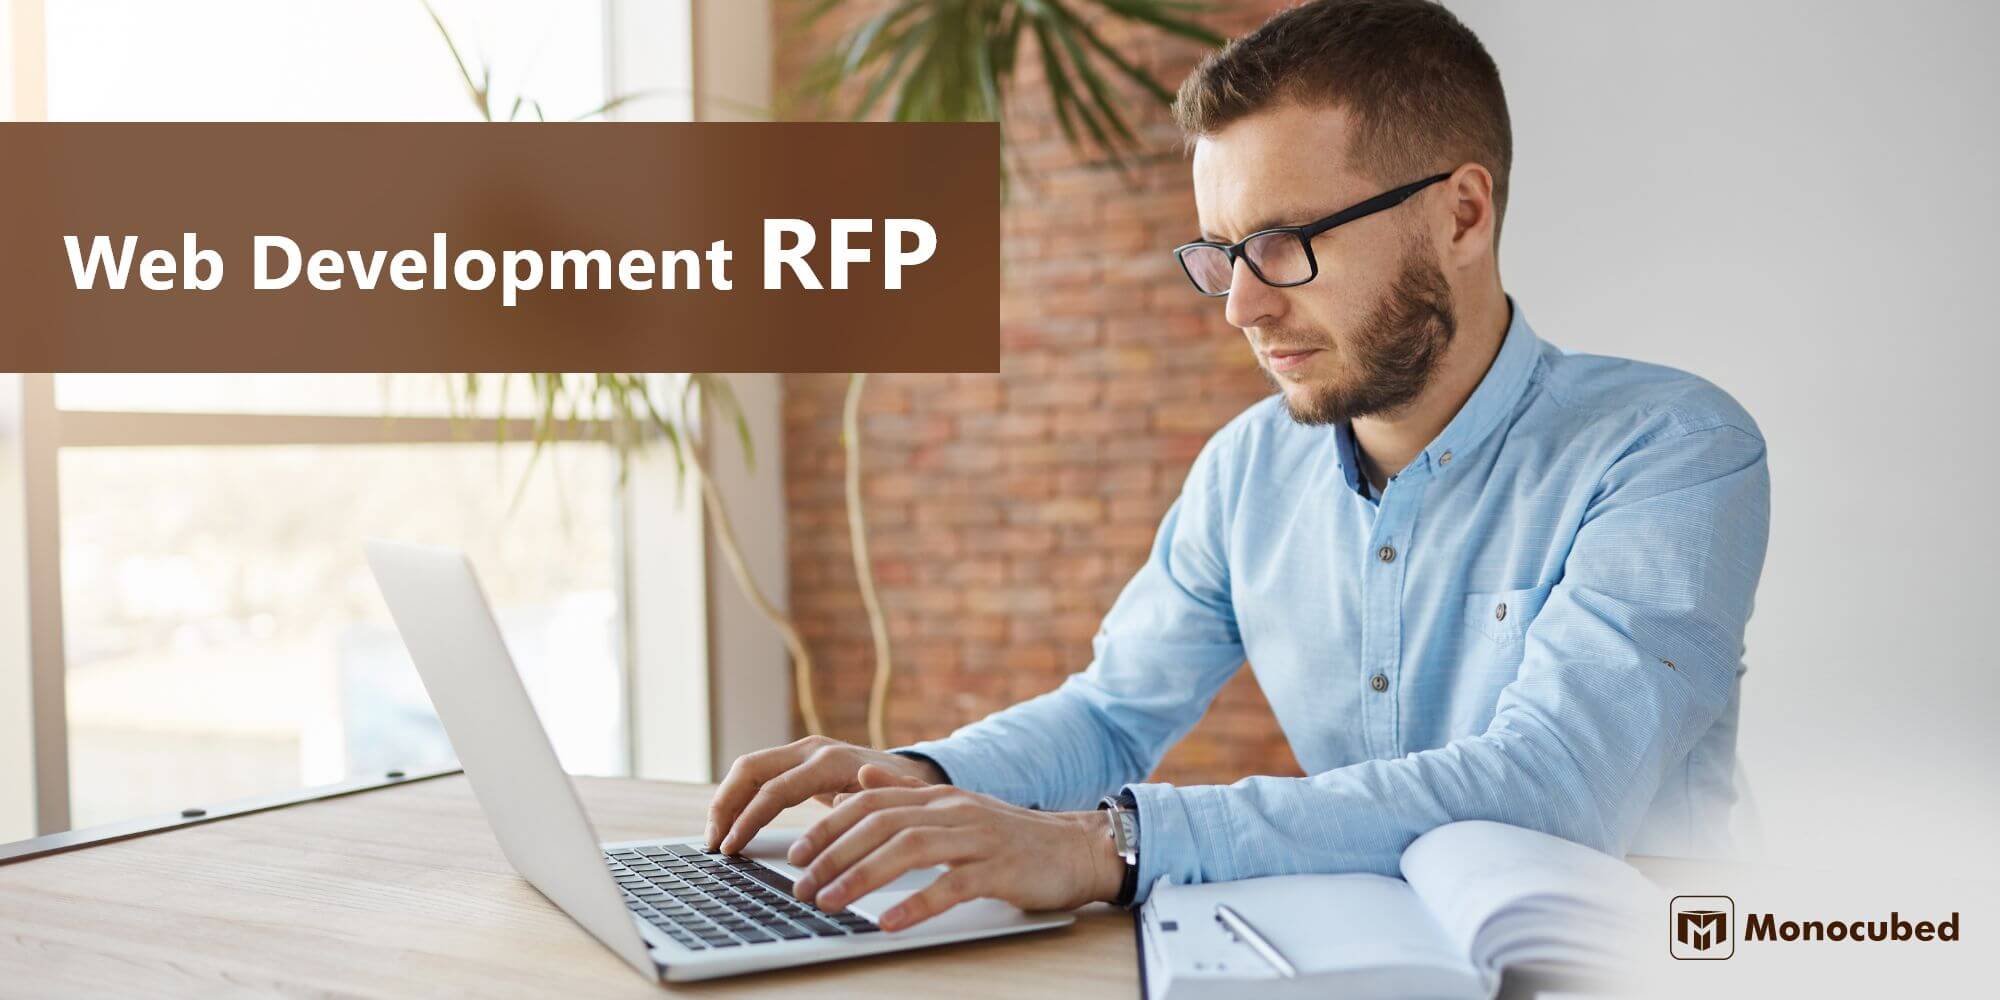 Web Development RFP